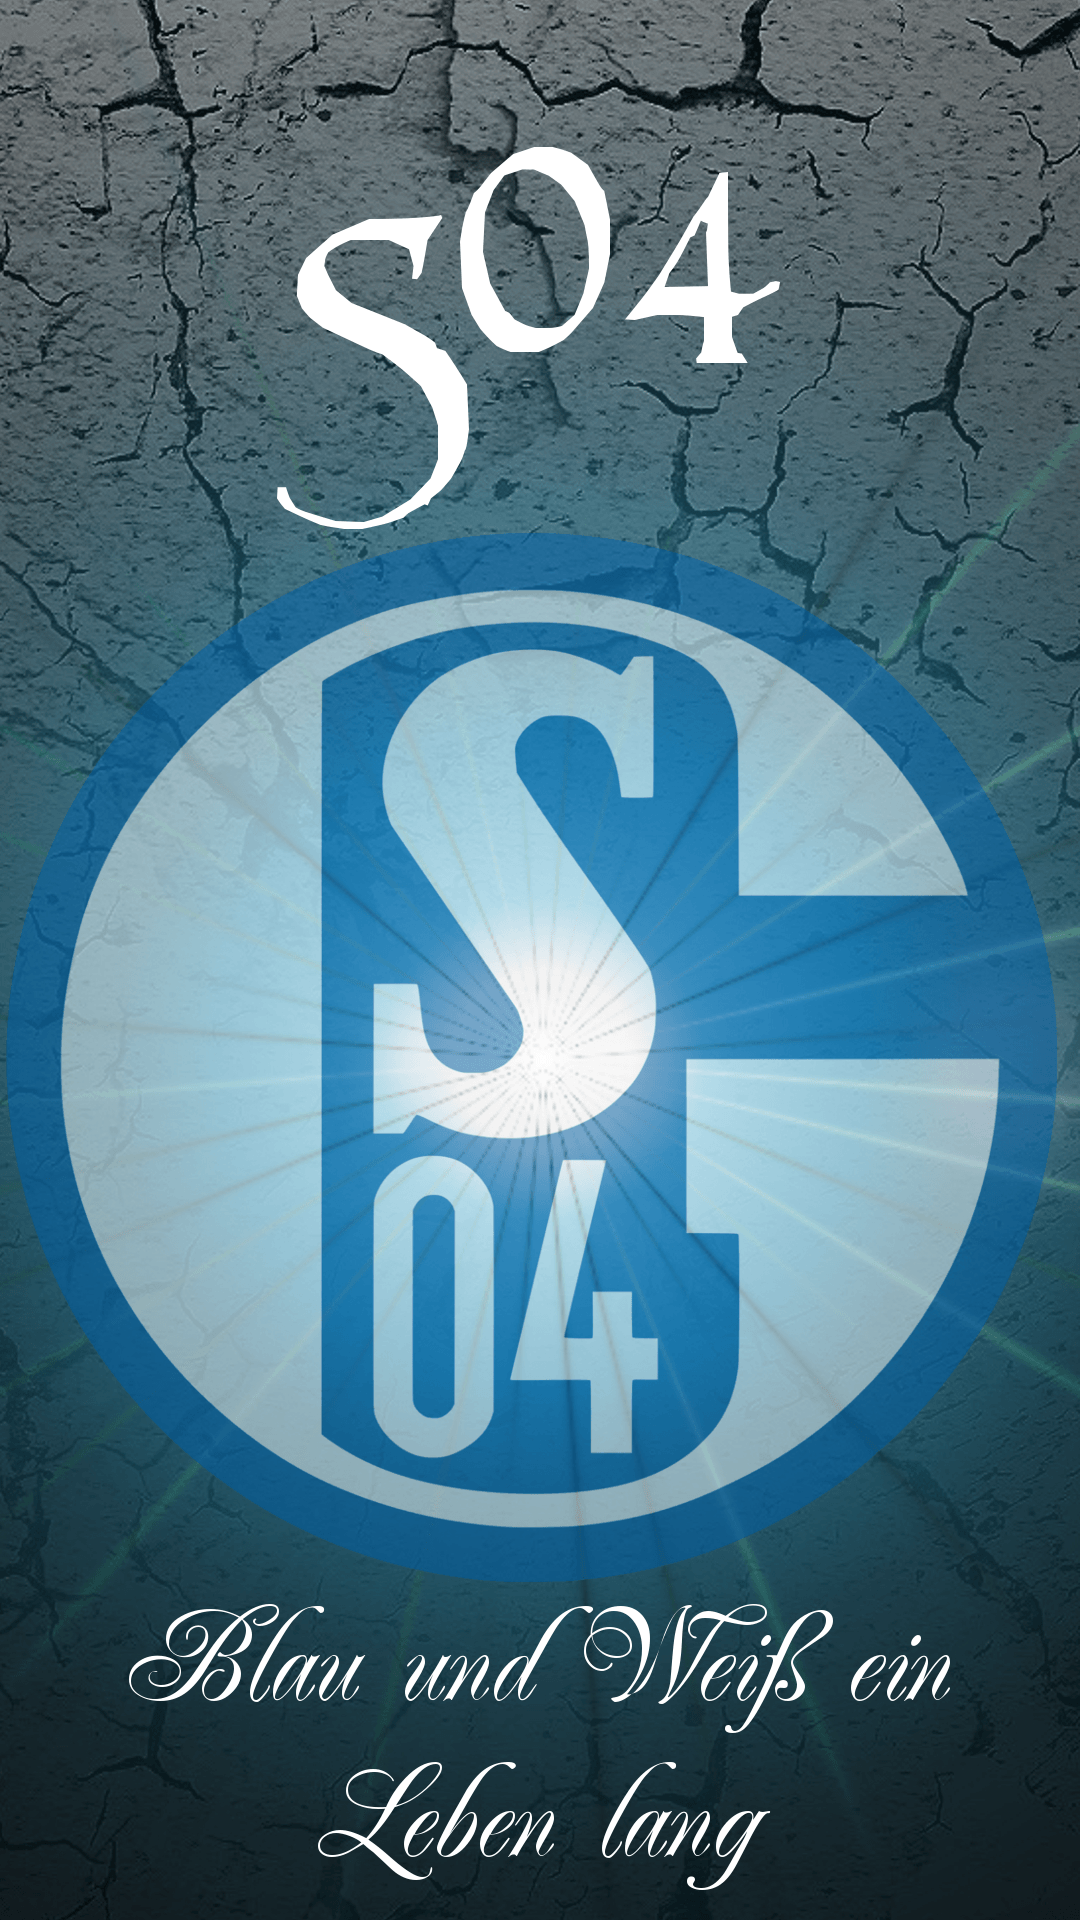 Mobile Schalke 04 Wallpaper. Full HD Picture